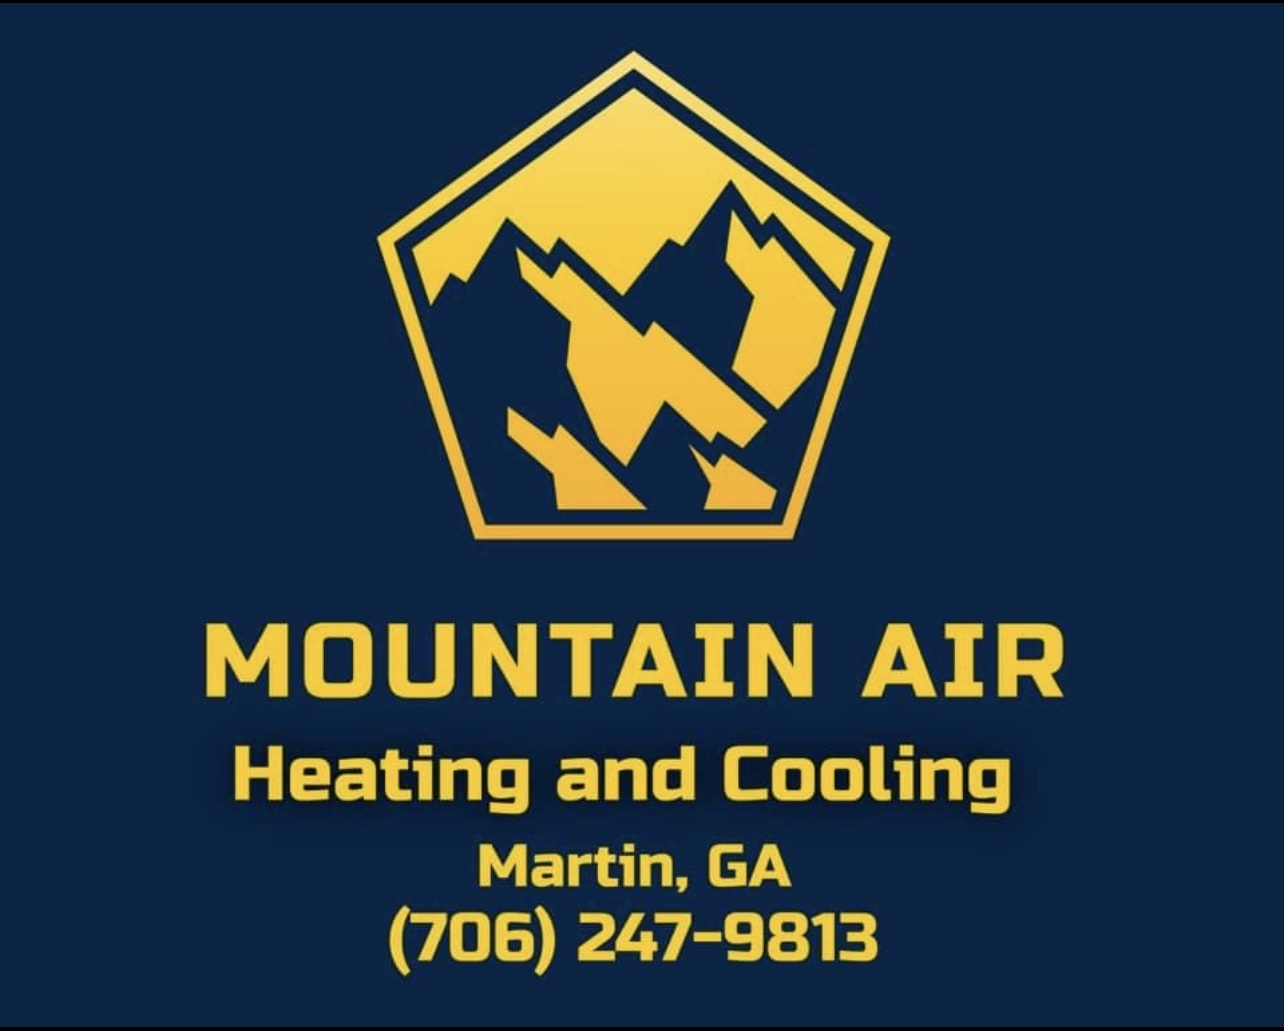 Mountain Air Heating and Cooling, LLC-Martin, GA GA-17, Martin Georgia 30557